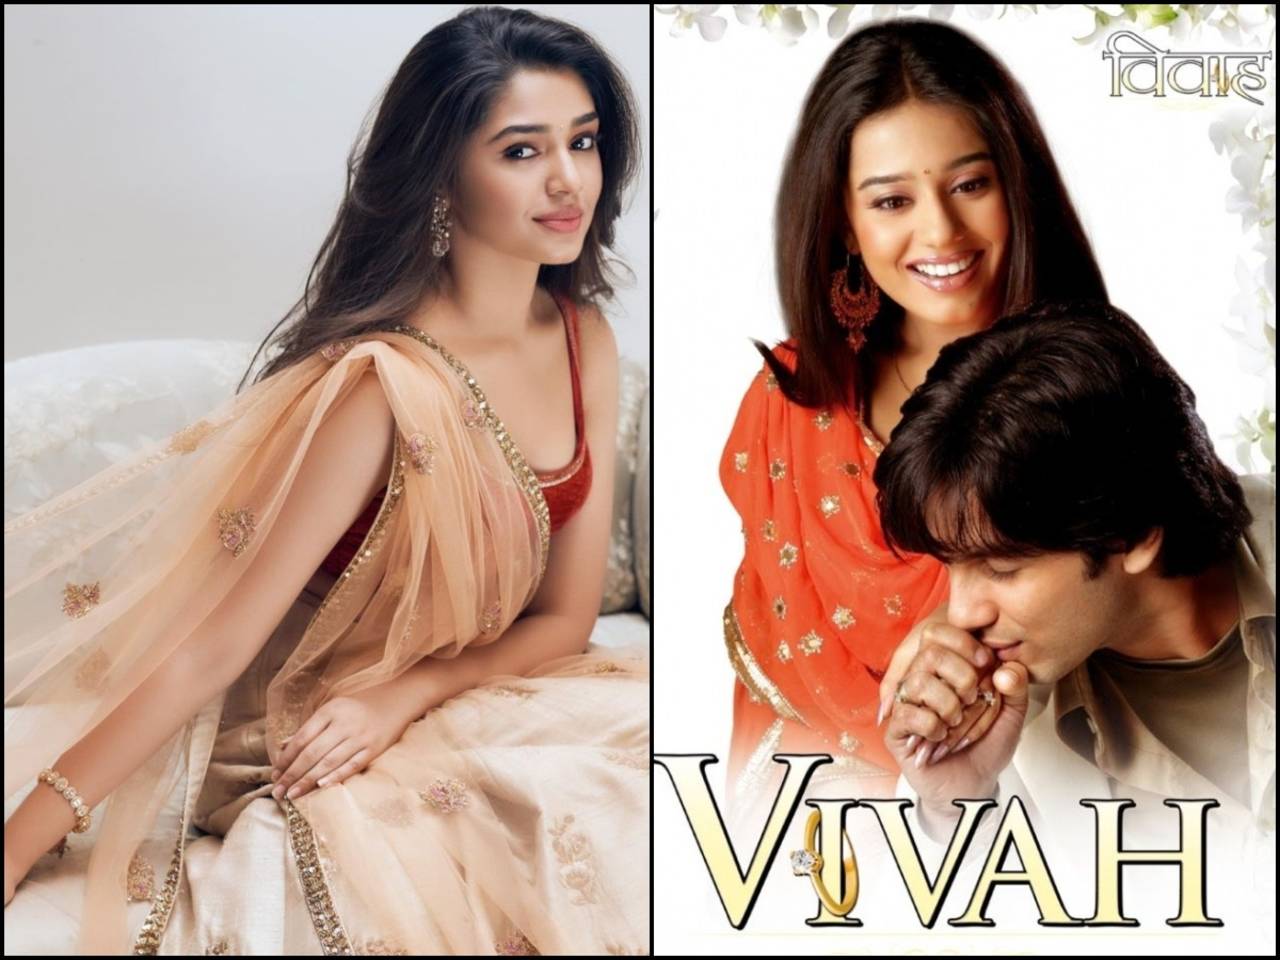 Krithi Shetty and Bellamkonda Ganesh for 'Vivah' Telugu remake ...